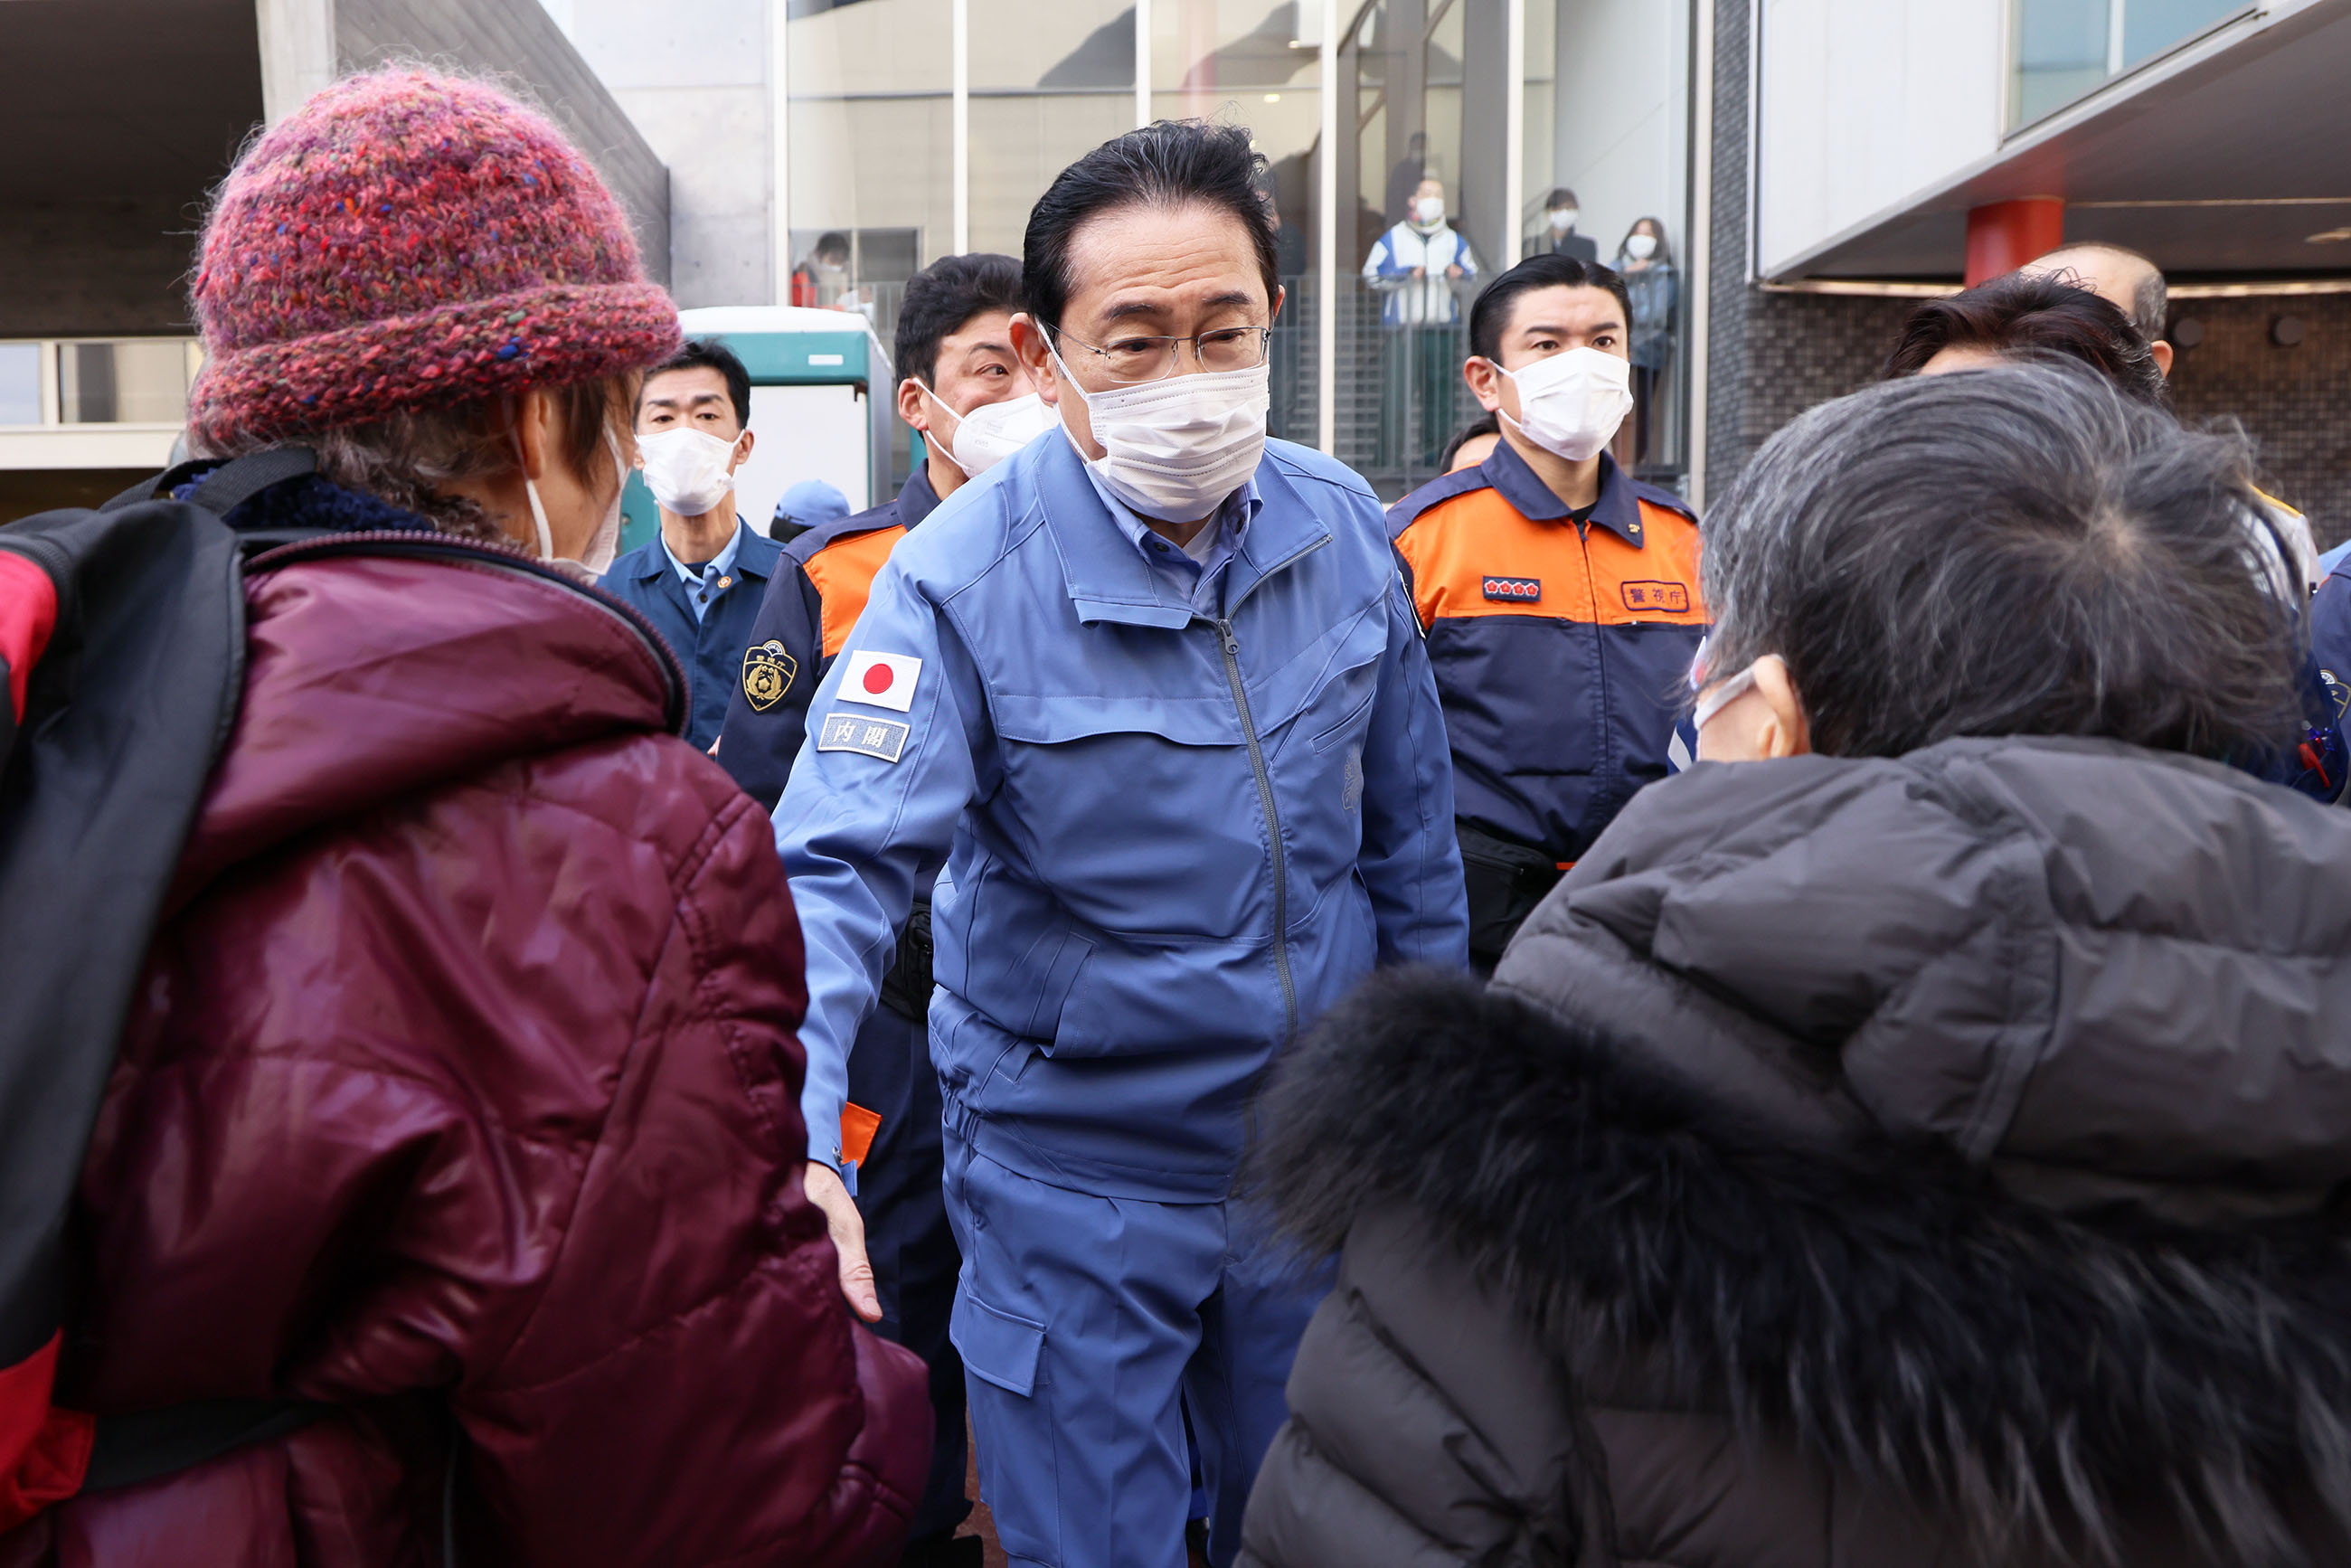 Prime Minister Kishida visiting evacuation centers (3)